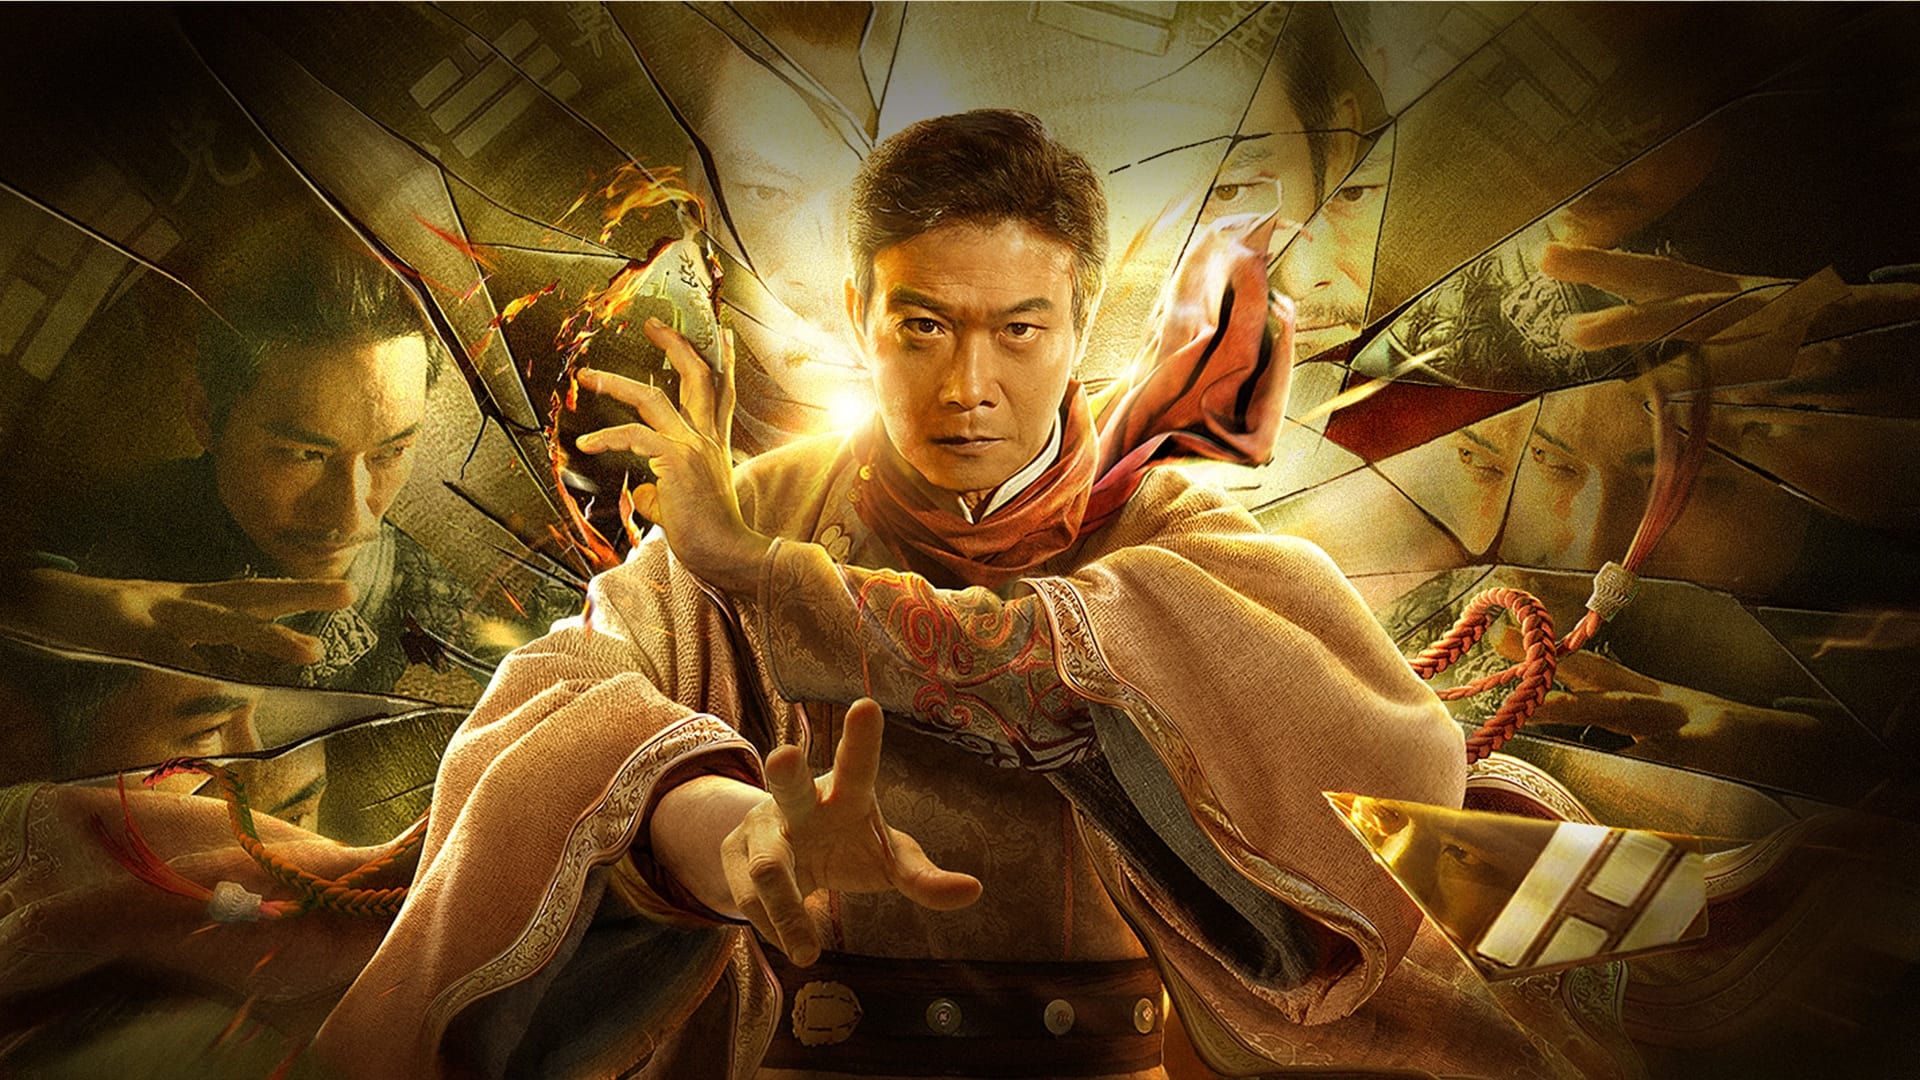 Poster Phim Huyễn Thuật Tiên Sinh (The Great Magician)